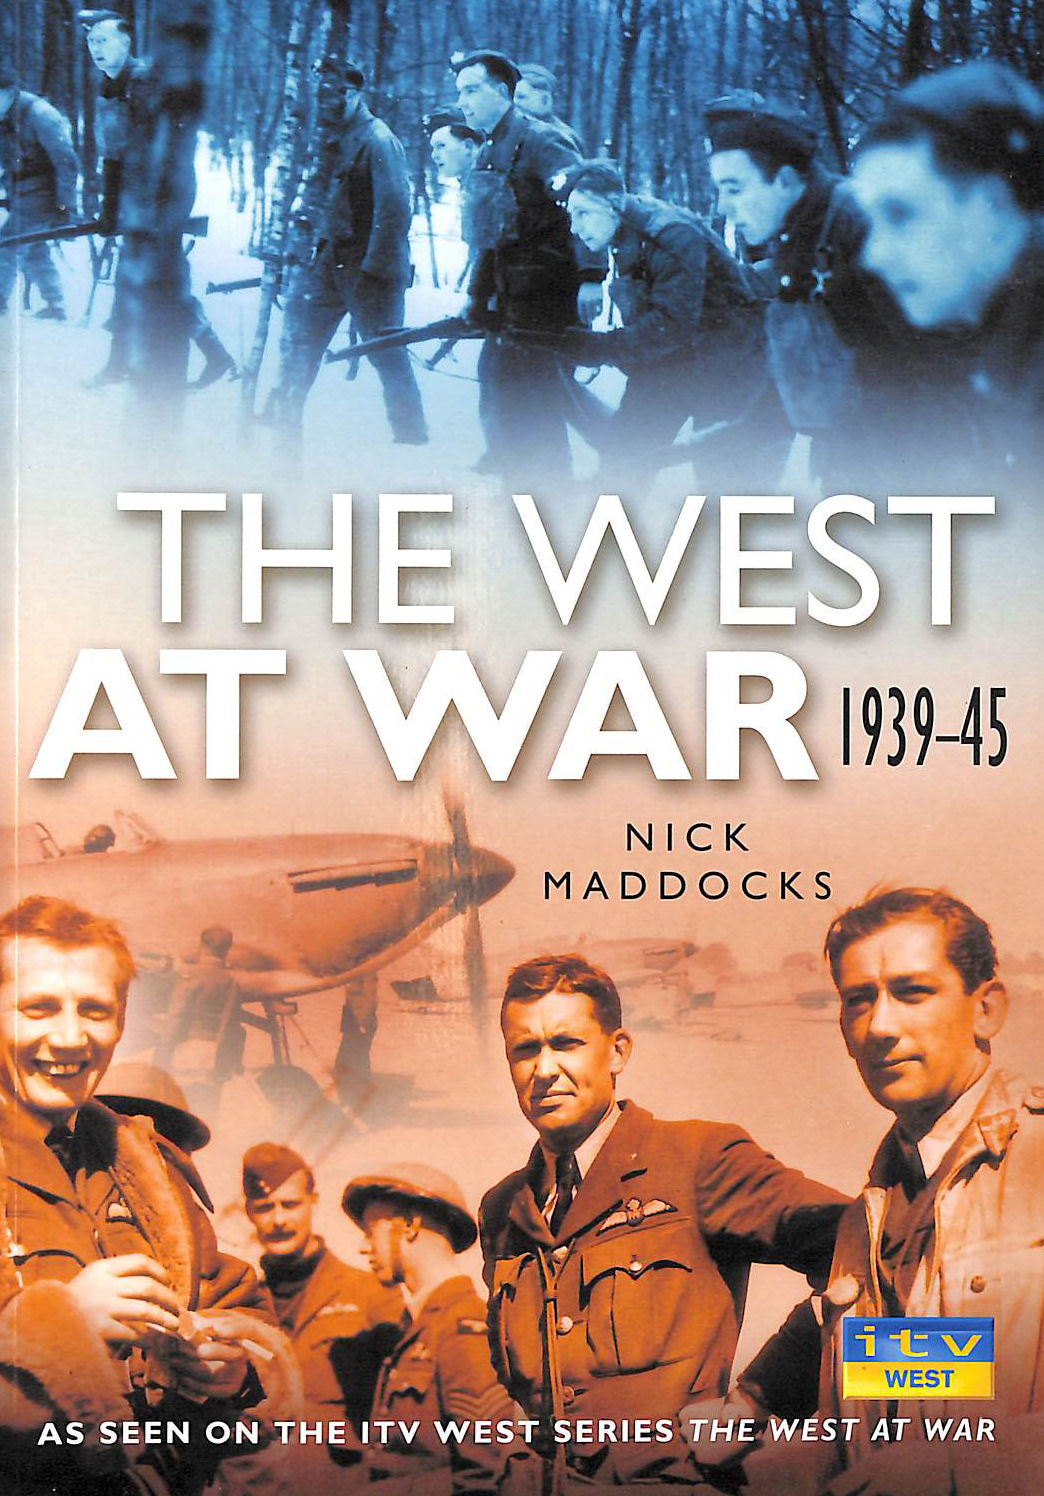 NICK MADDOCKS - The West at War